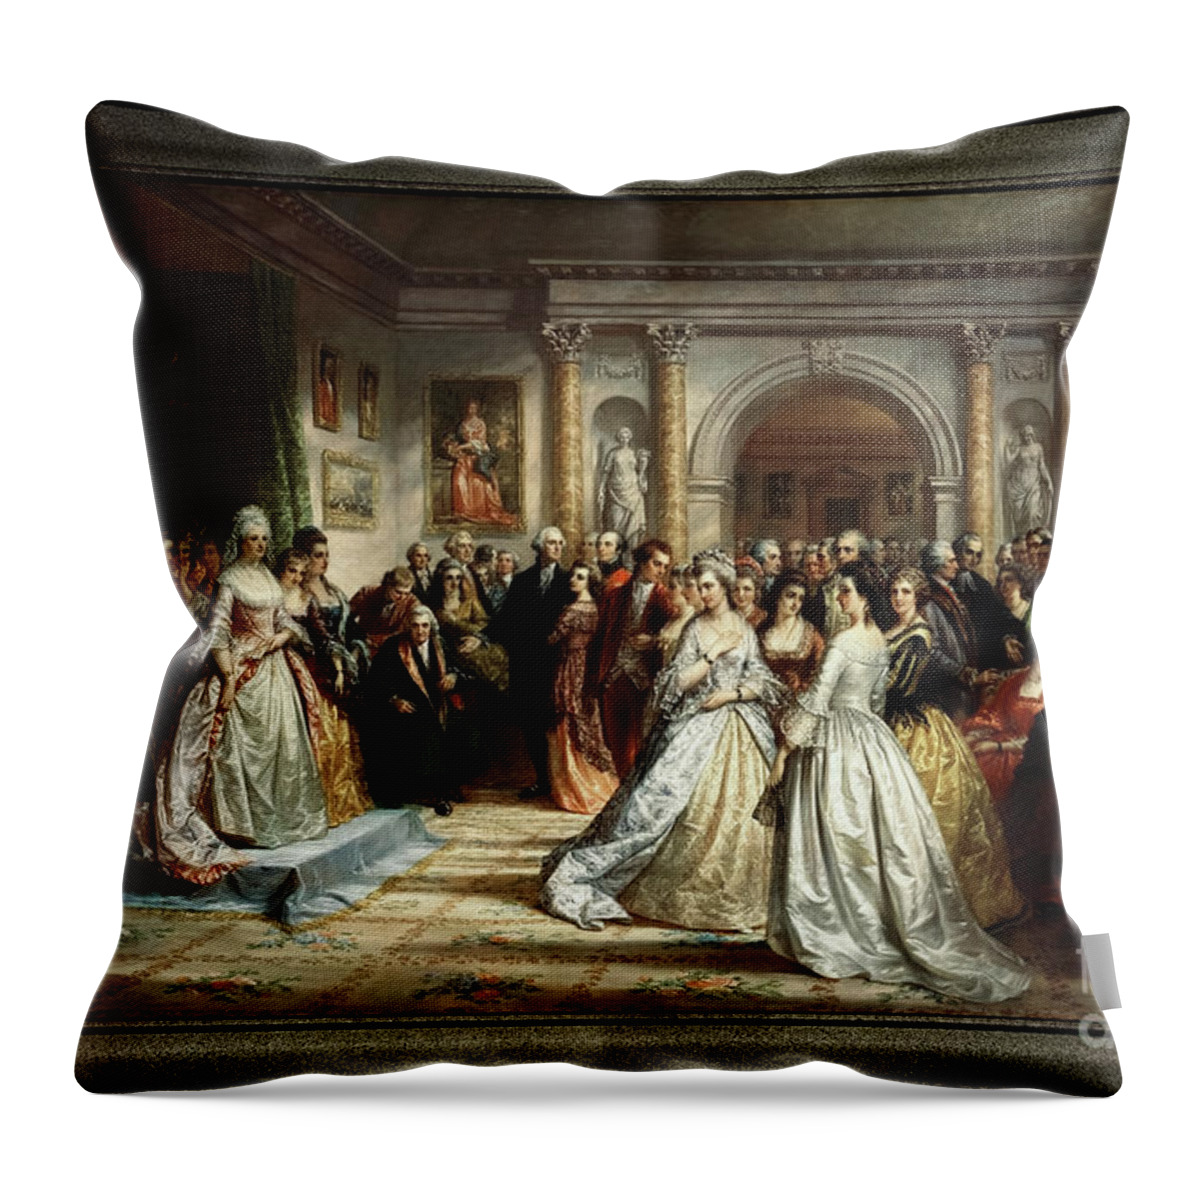 Lady Washington's Reception Day Throw Pillow featuring the painting Lady Washington's Reception Day by Daniel Huntington Old Masters Fine Art Reproduction by Rolando Burbon